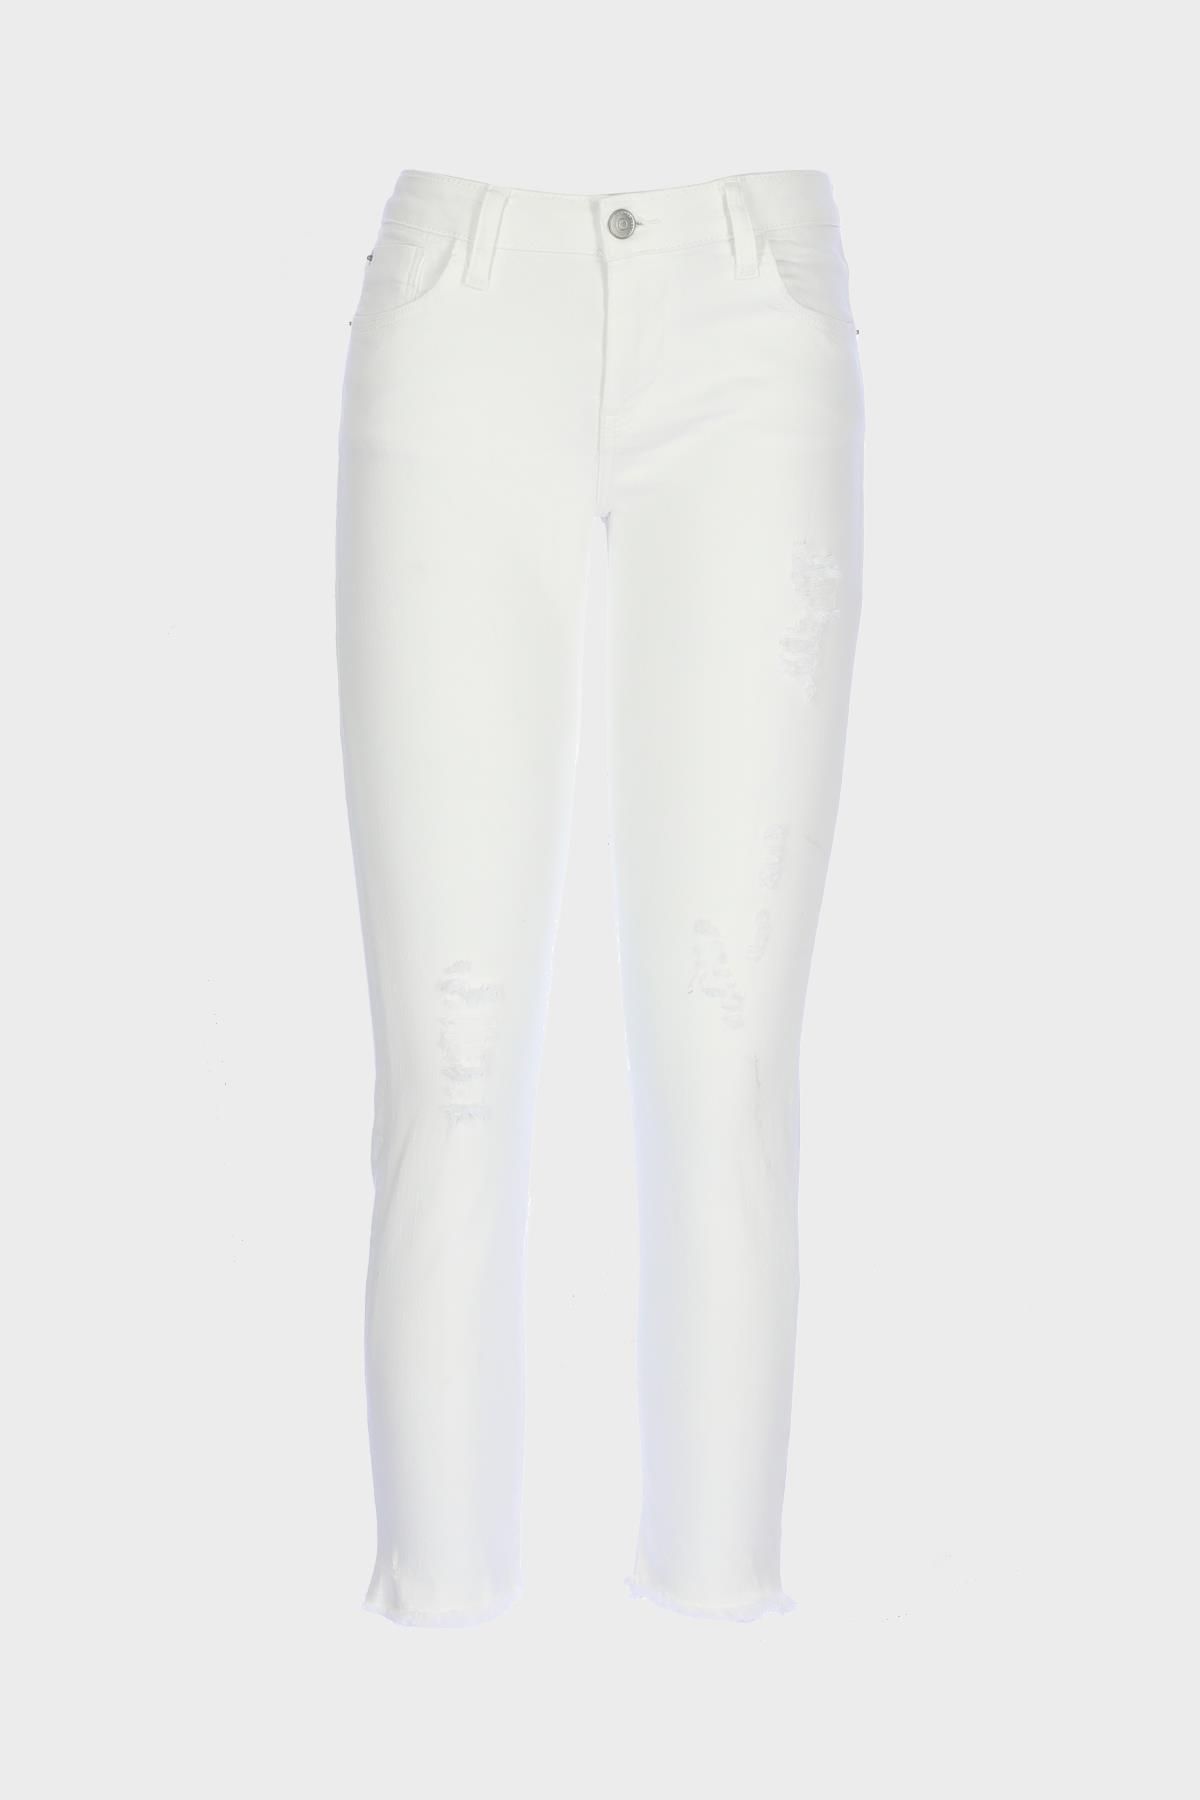 CROSS JEANS Naomi Beyaz Normal Bel Yıpratma Detaylı Paçası Kesikli Skinny Fit Jean Pantolon C 4526-056